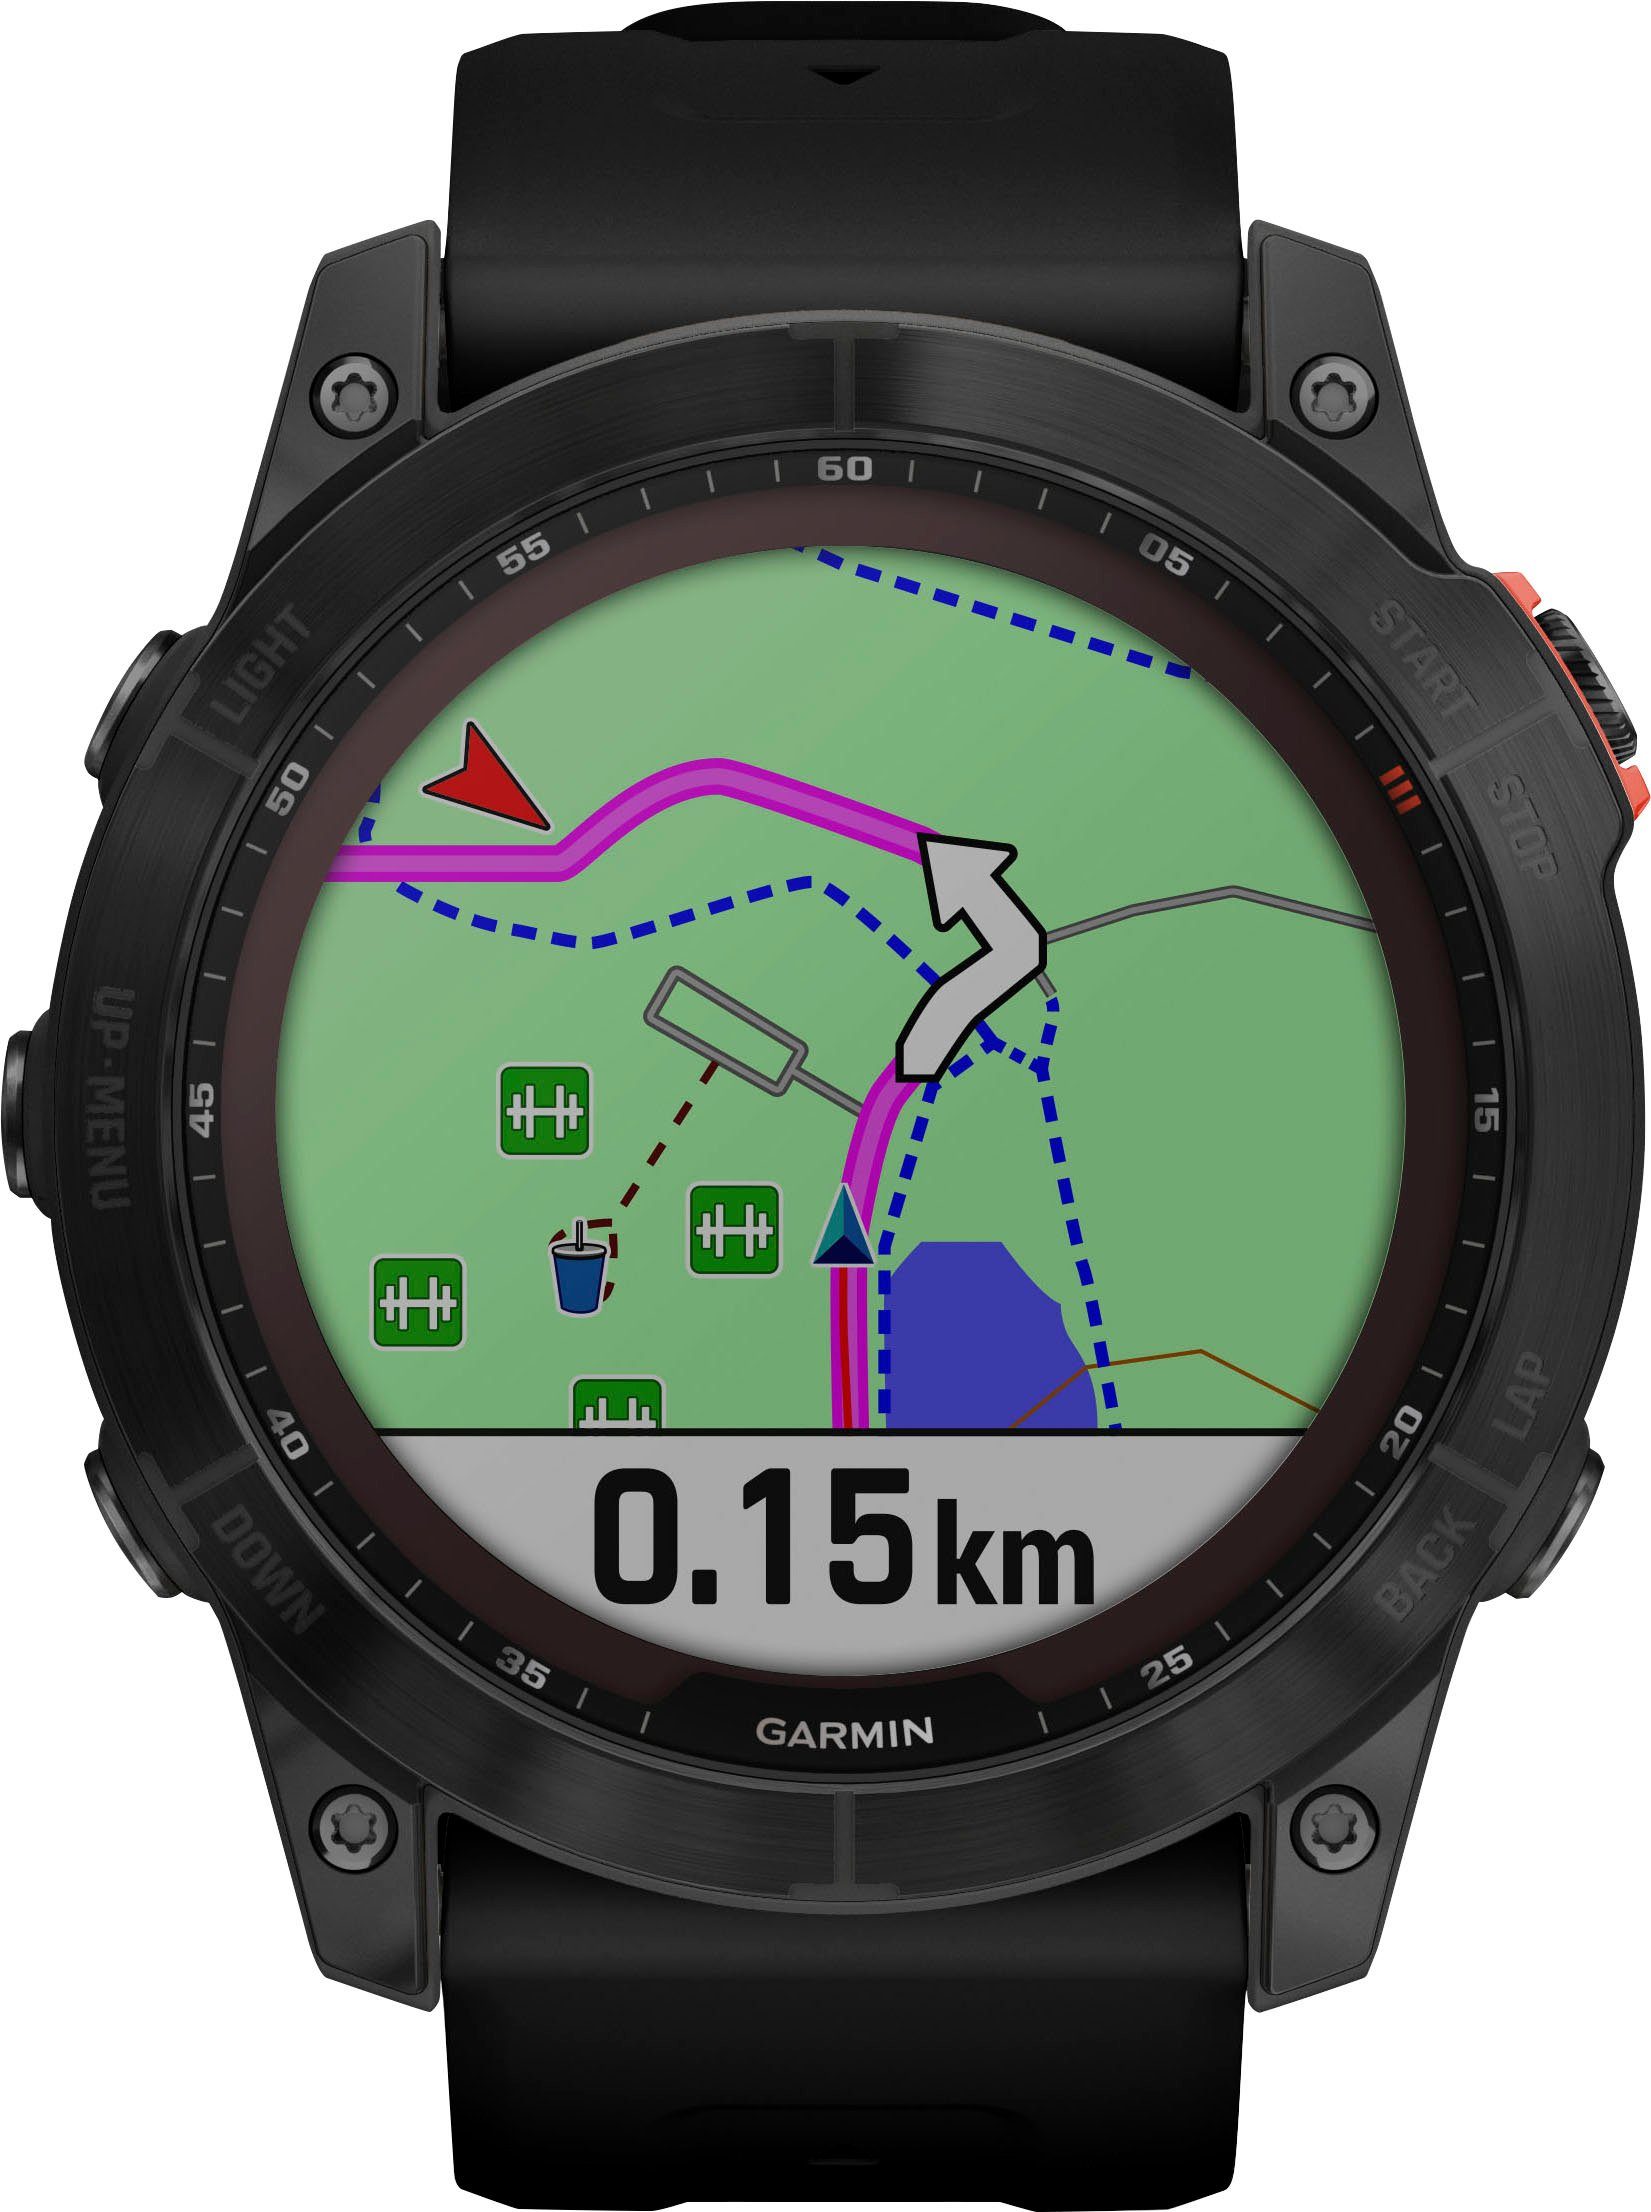 cm/1,4 Zoll, FENIX (3,55 7X Garmin Garmin) Smartwatch SOLAR